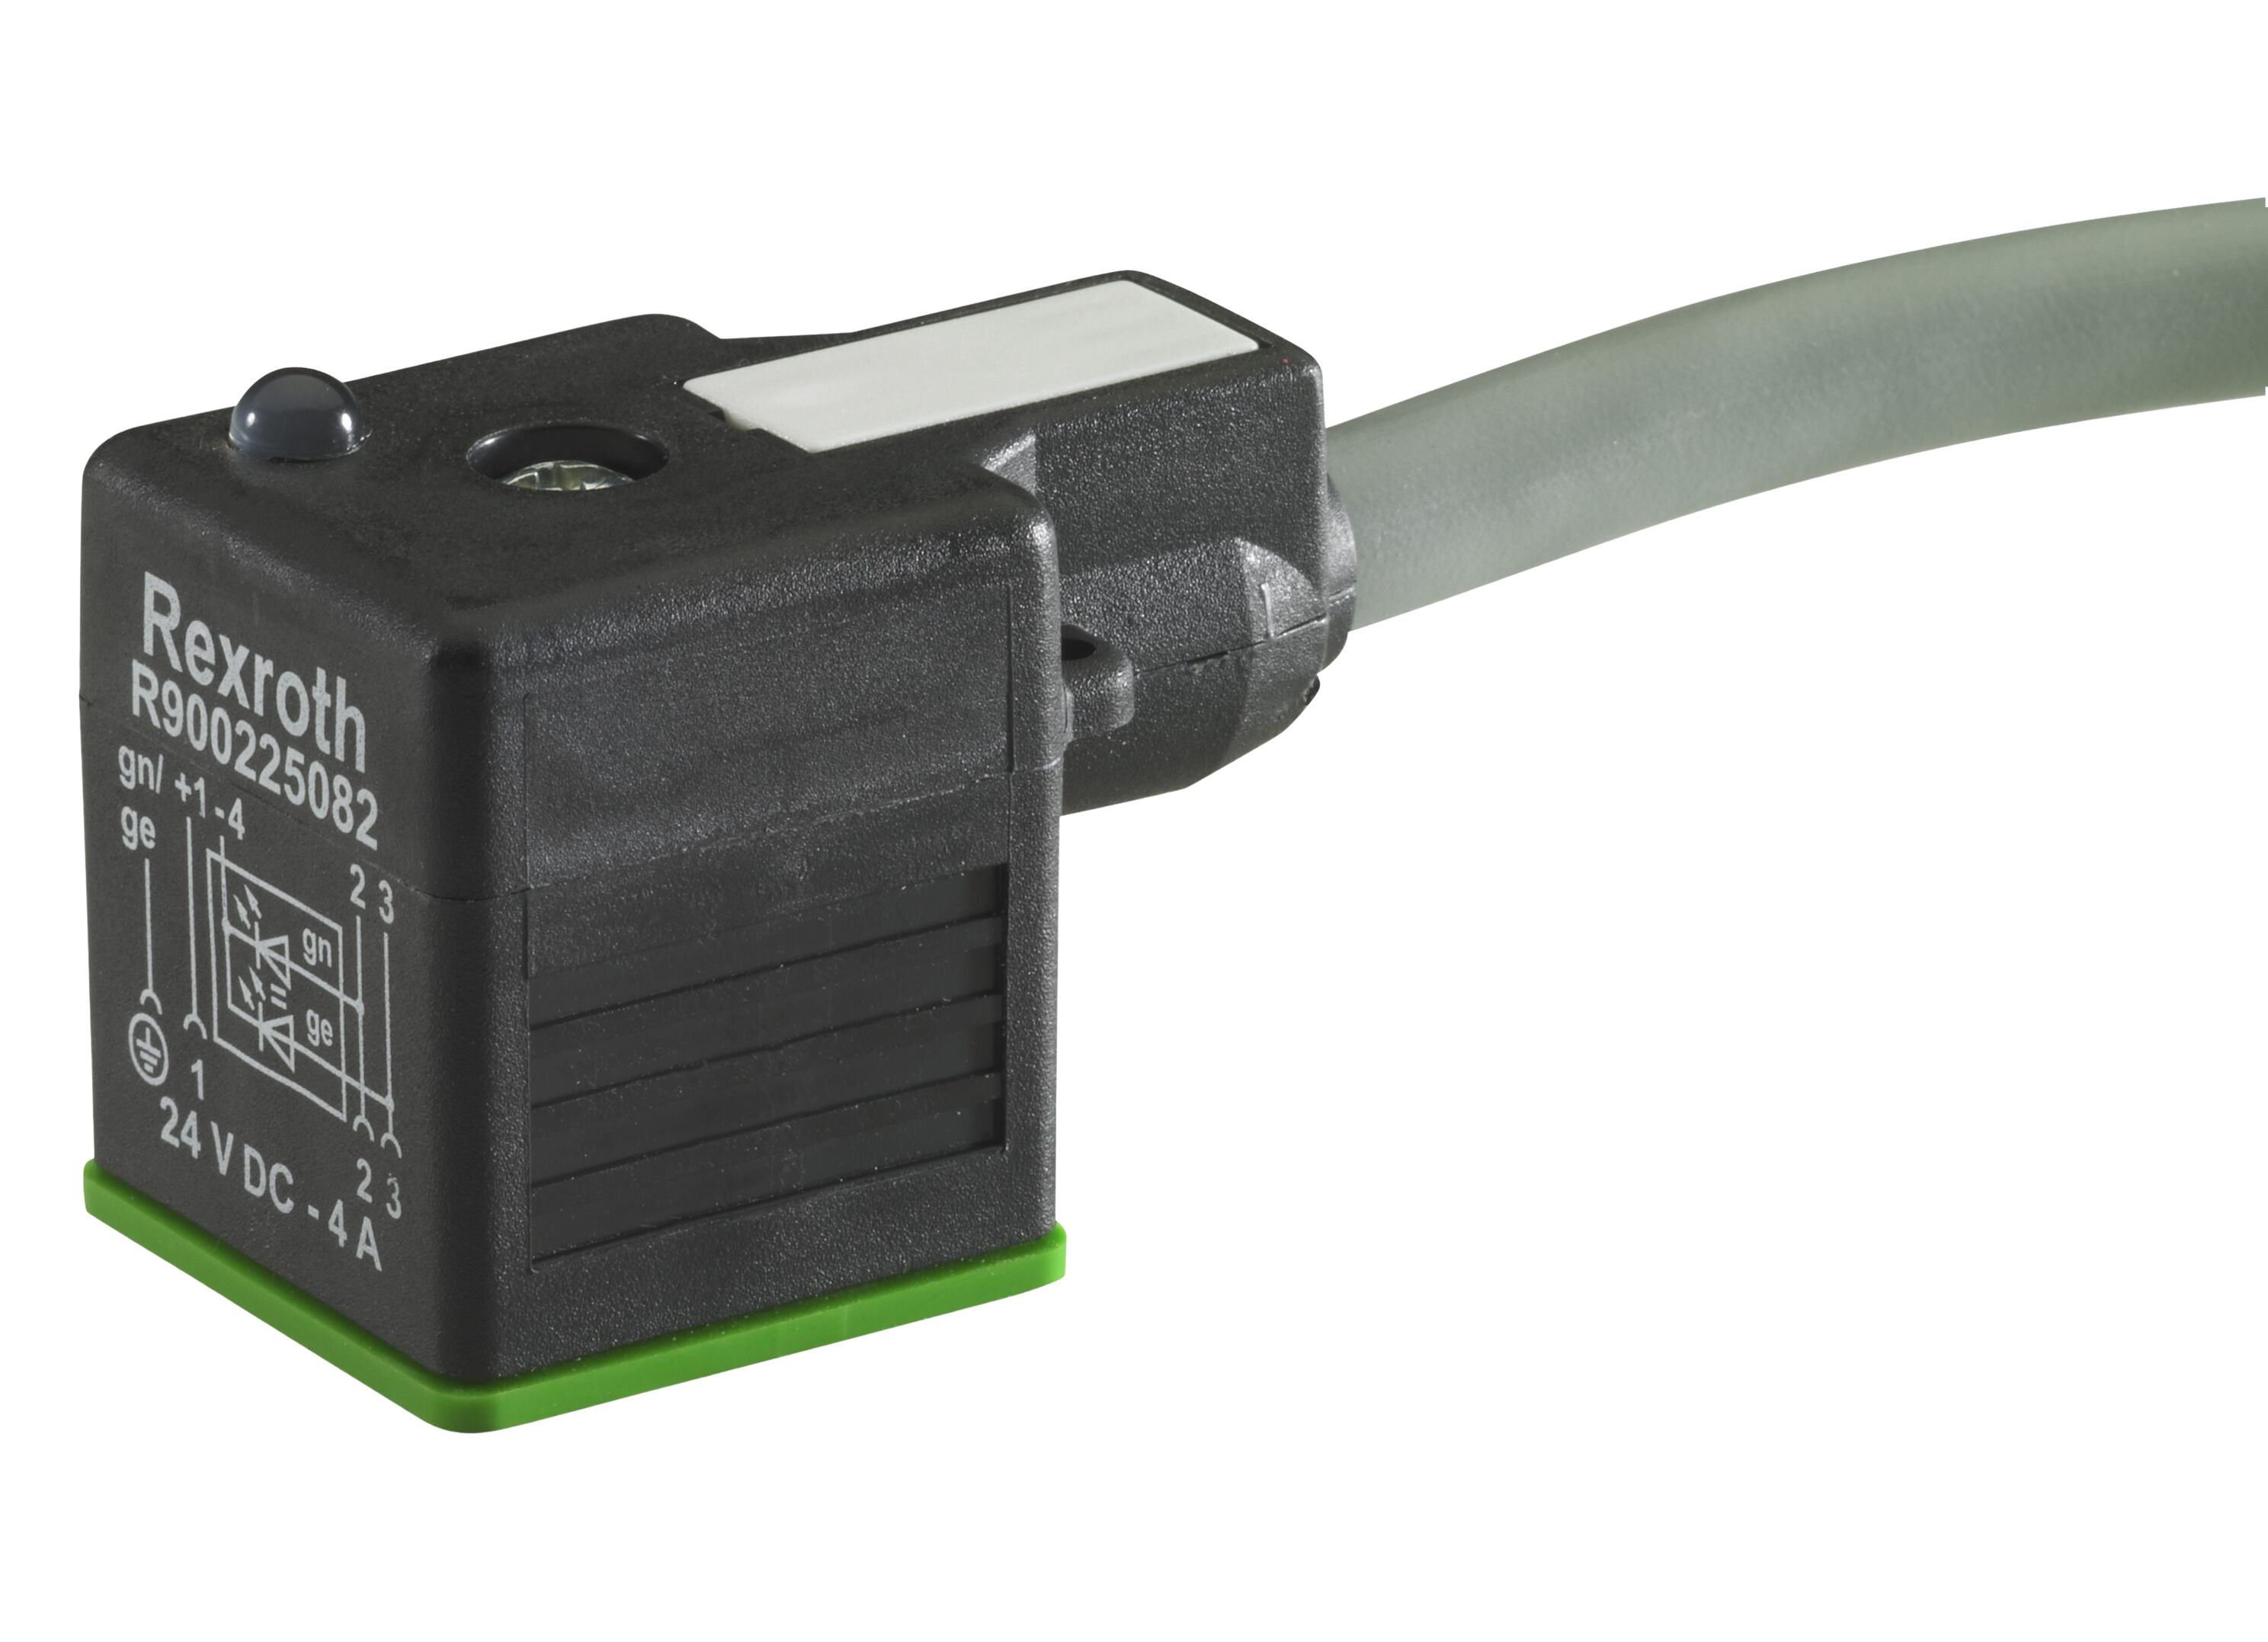 Bosch Rexroth Plug-in connector